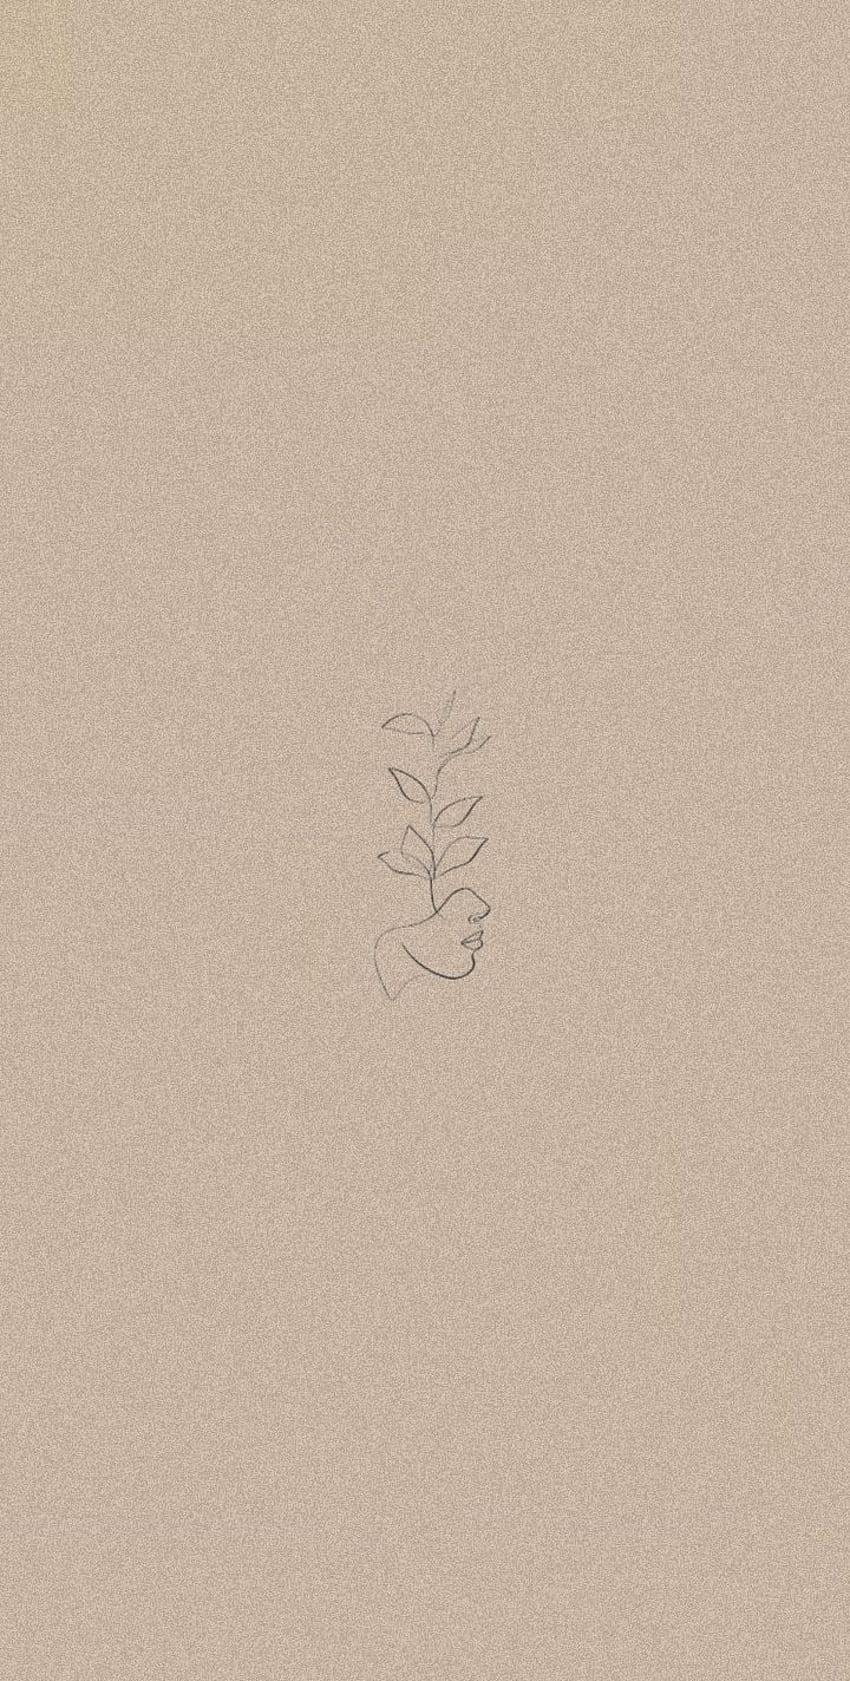 Aesthetic minimalist phone wallpaper with a plant - Minimalist beige